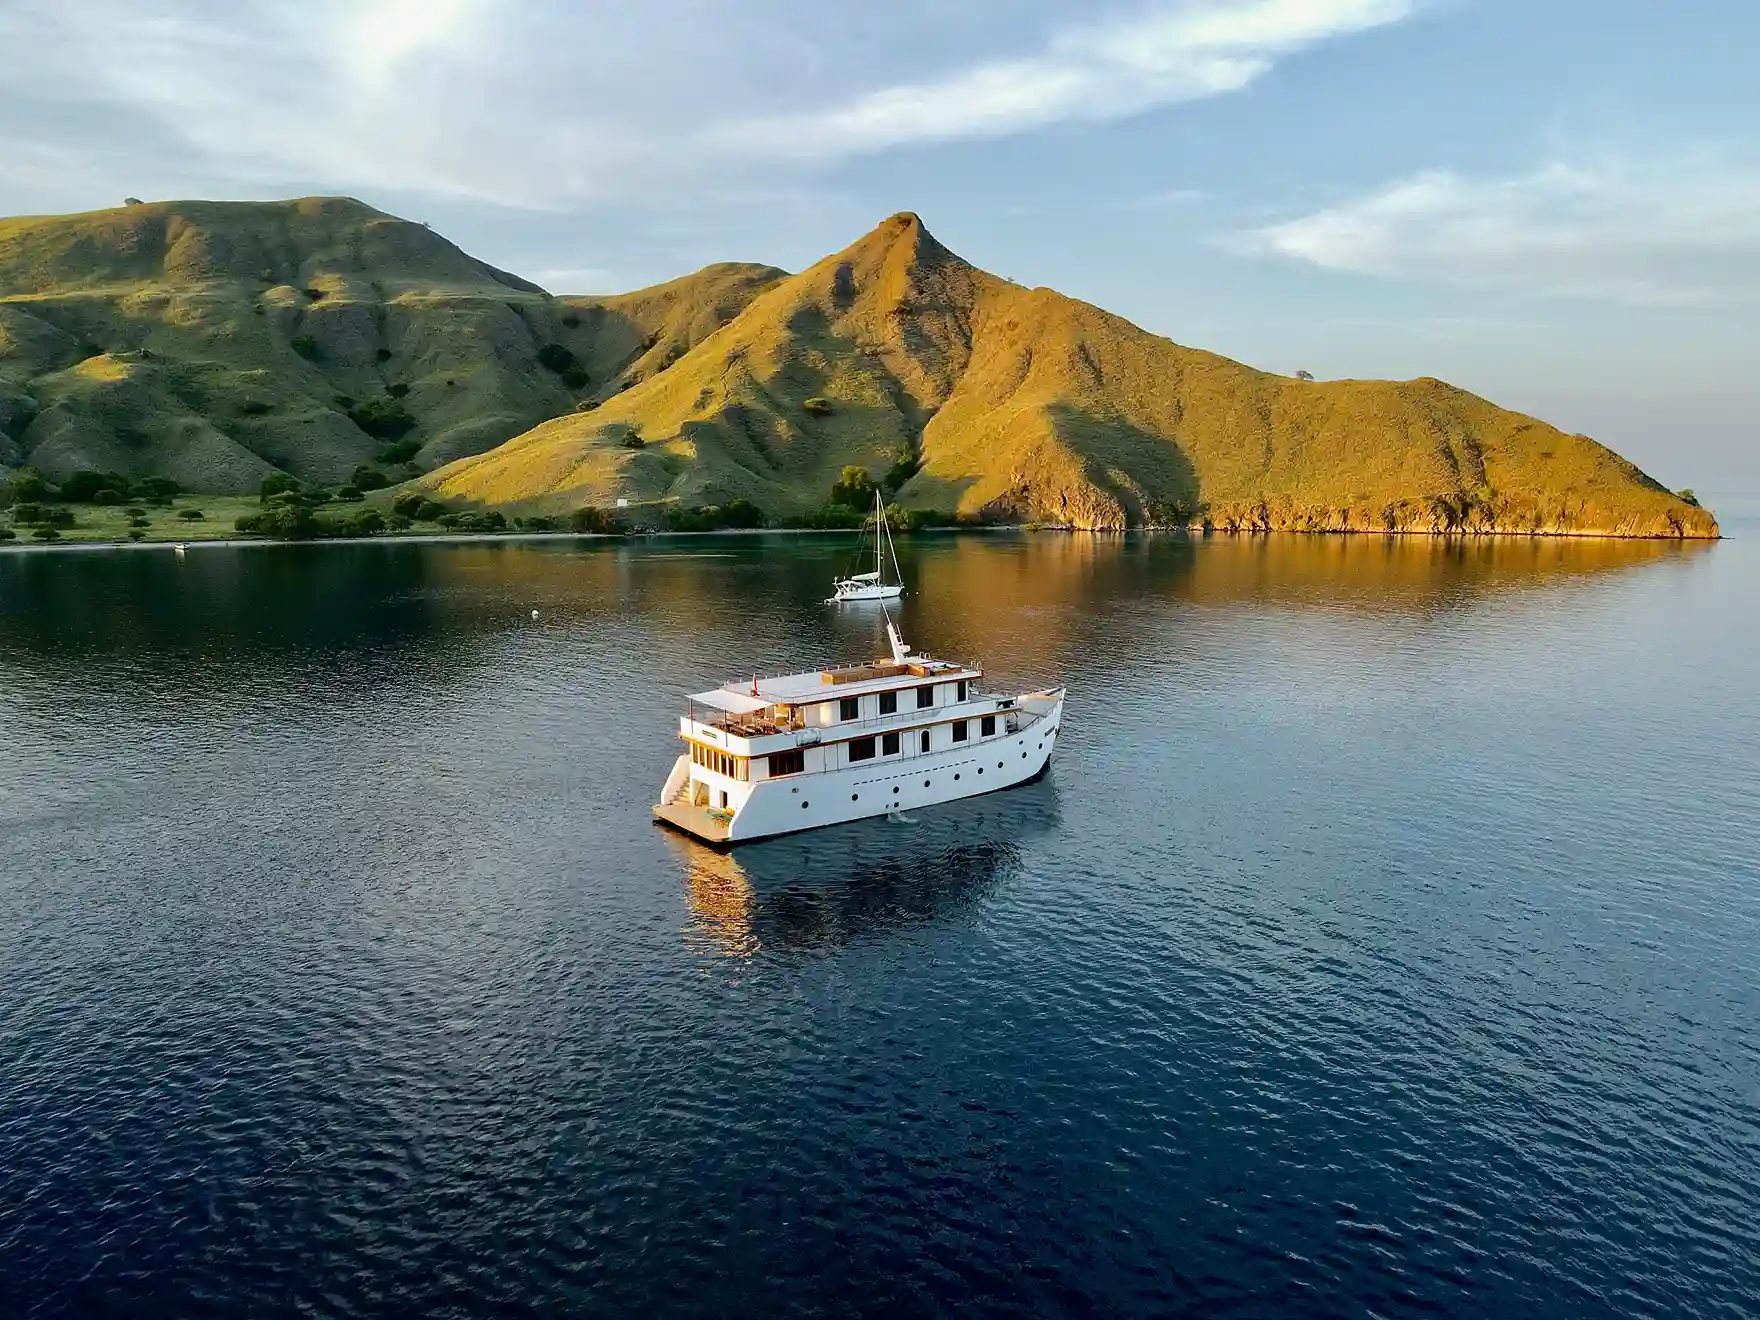 Sewa Kapal Le Costa Yacht Cruise - IndonesiaJuara